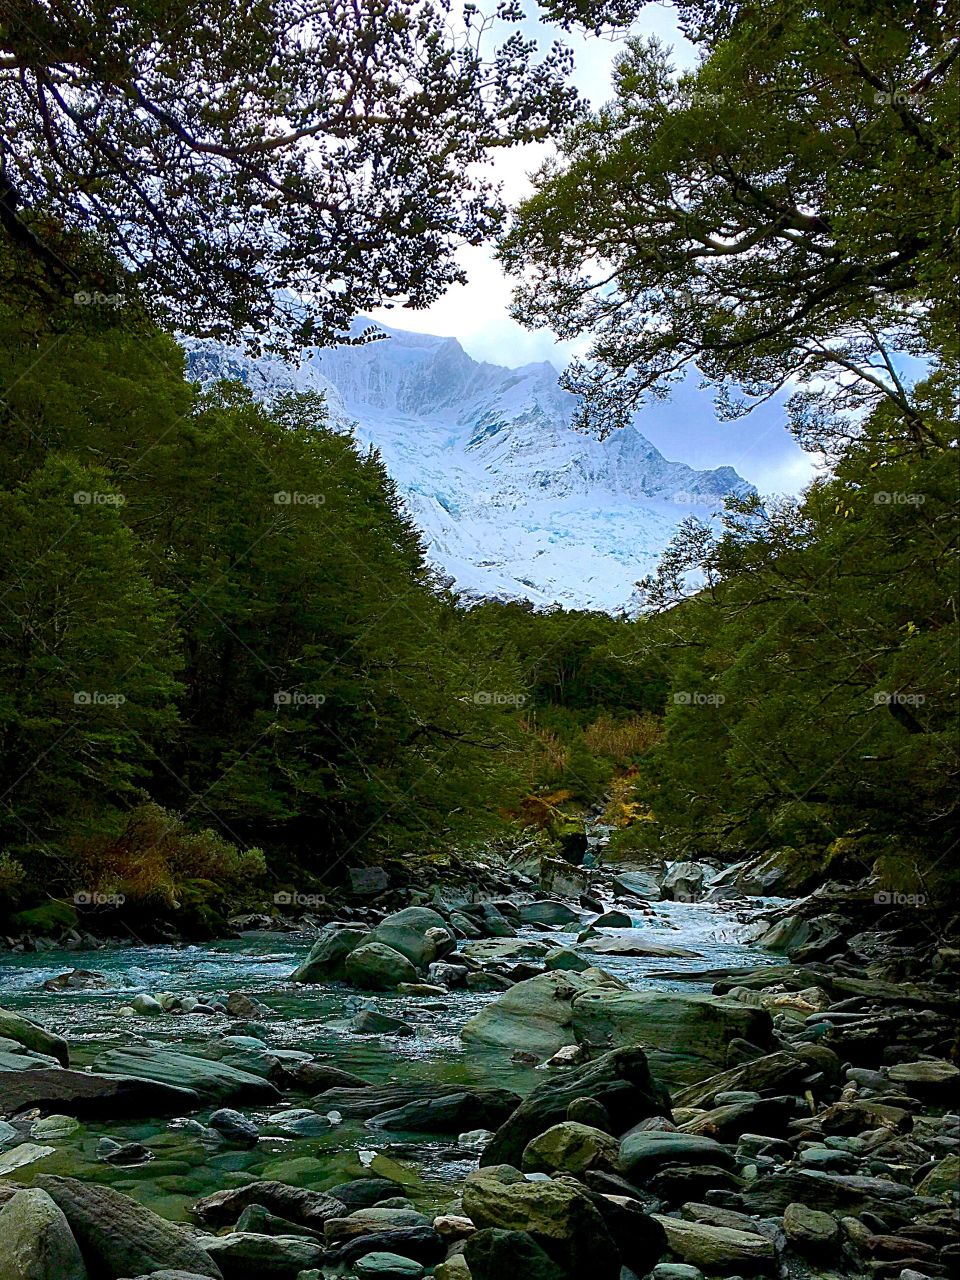 Mount Aspiring, New Zealand 